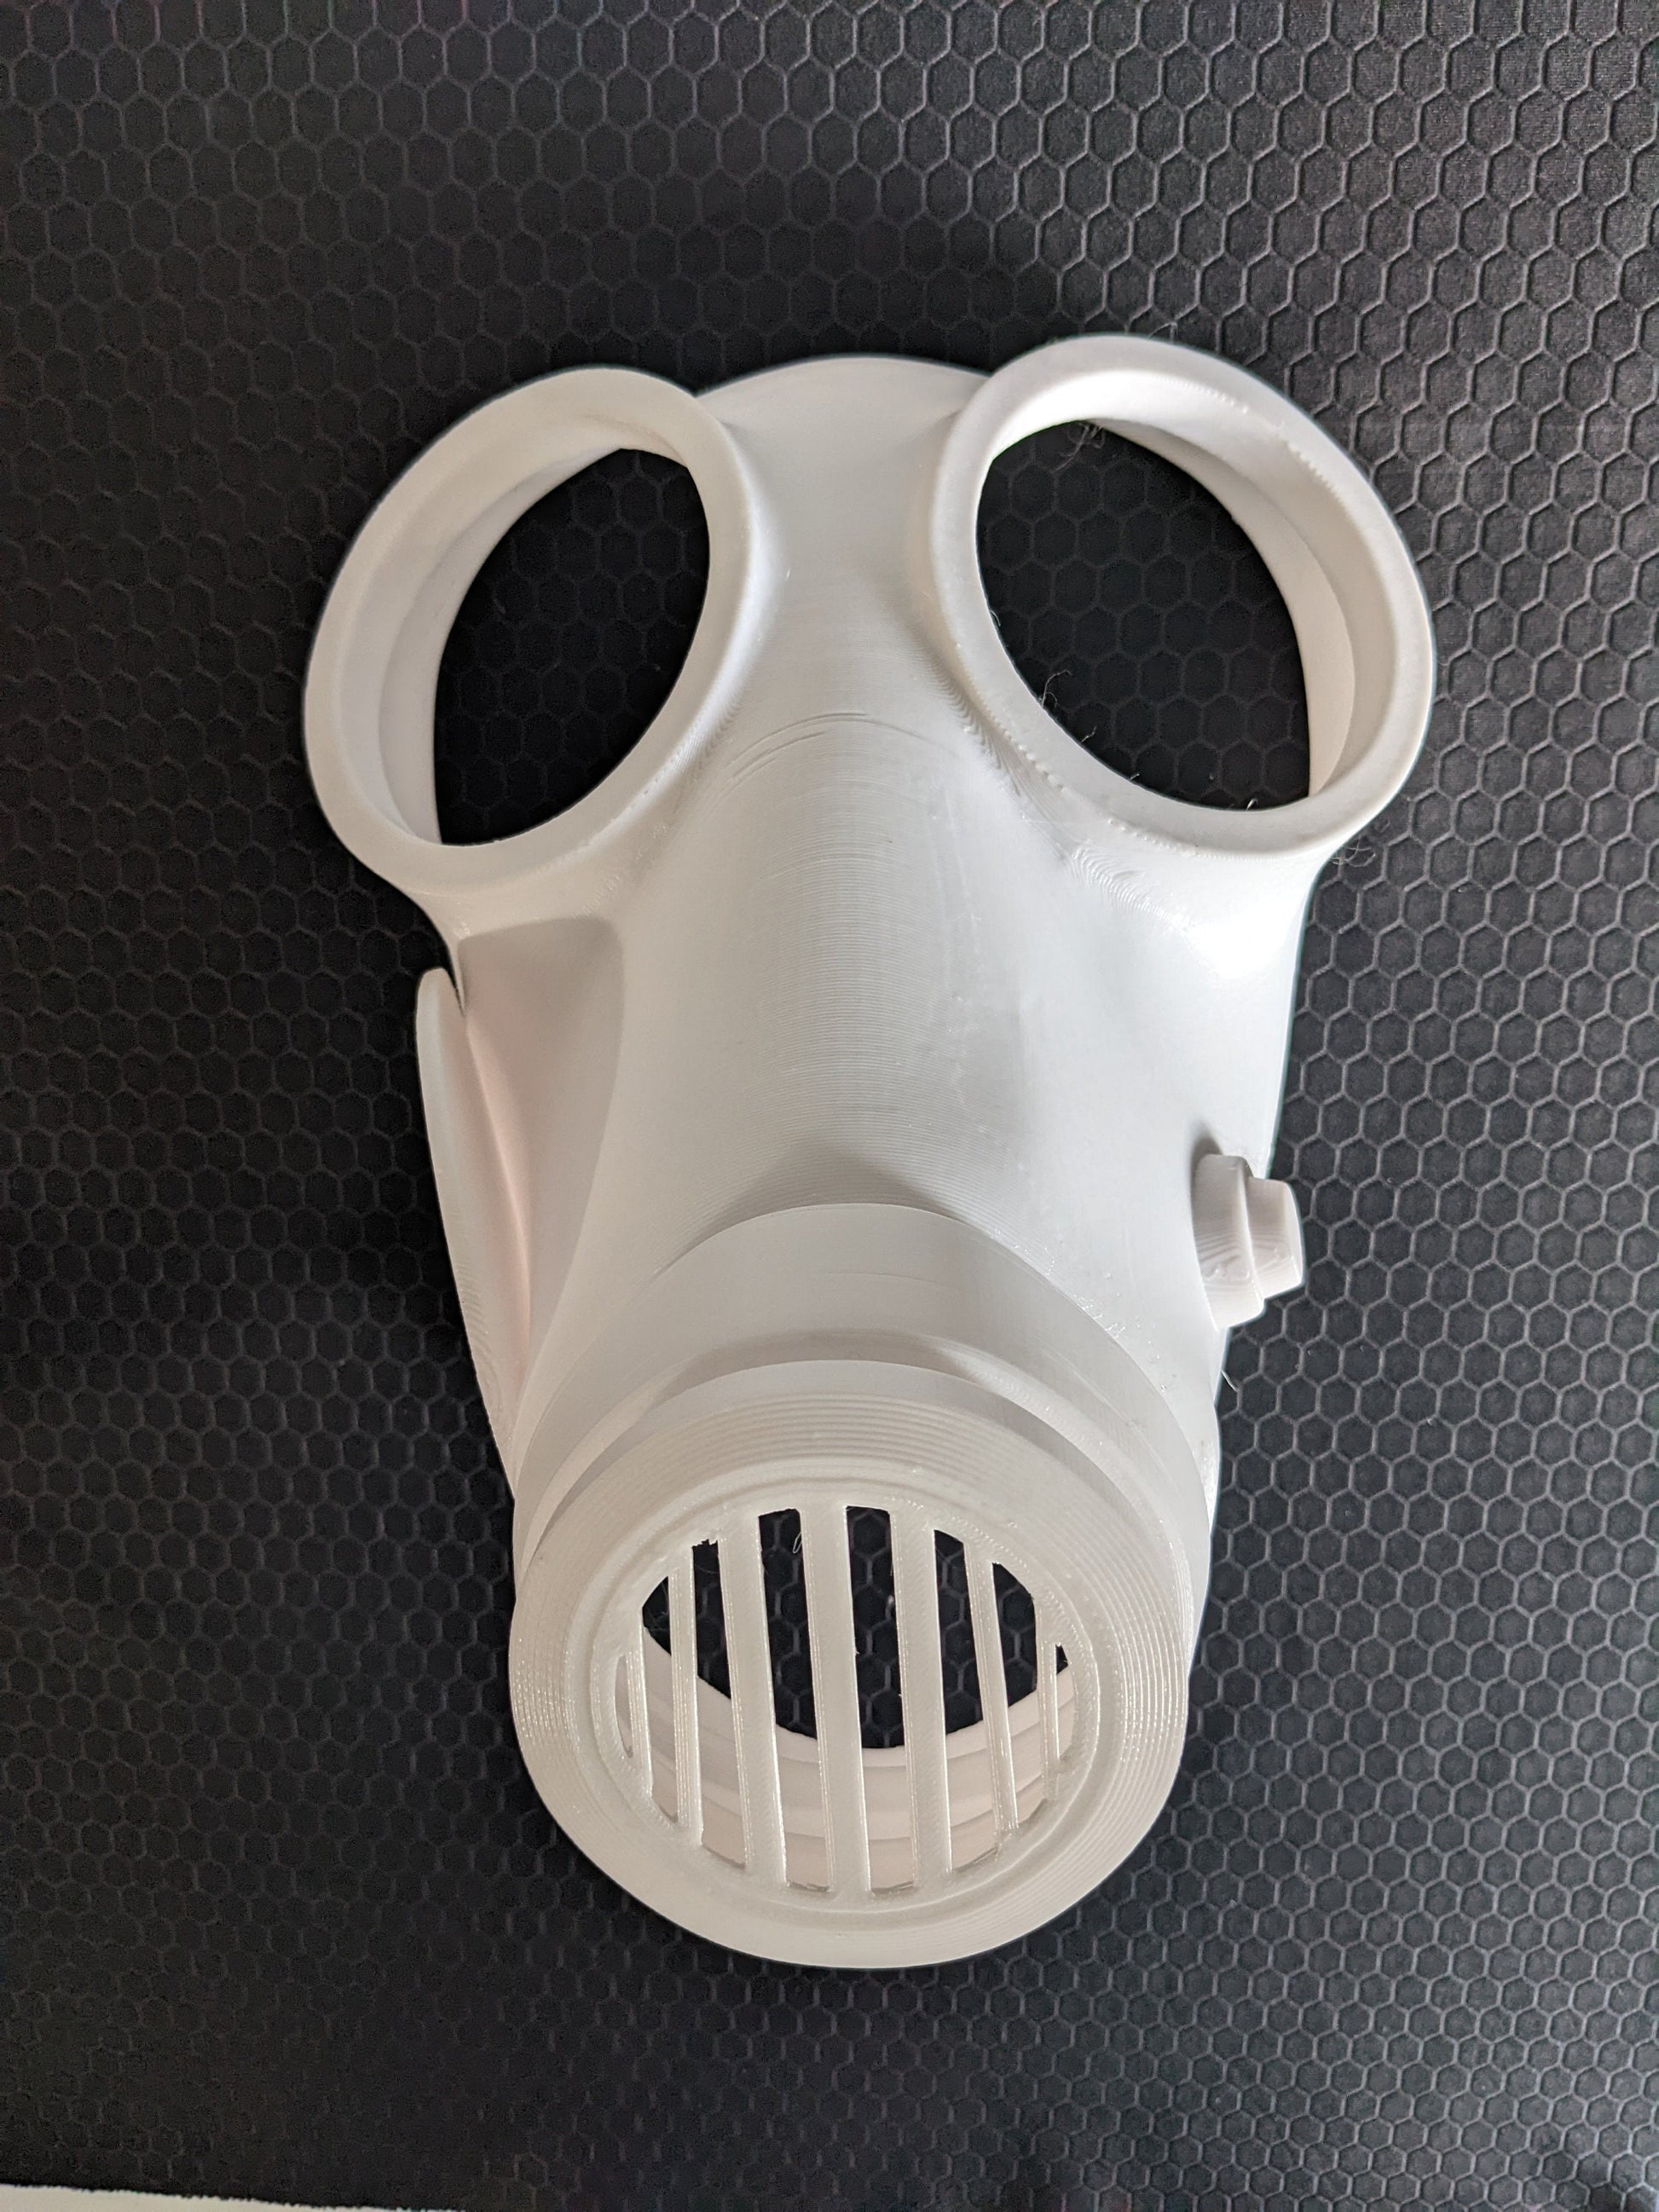 Pyro Mask - Digital 3D Model File - Pyro Cosplay - TF2 Cosplay